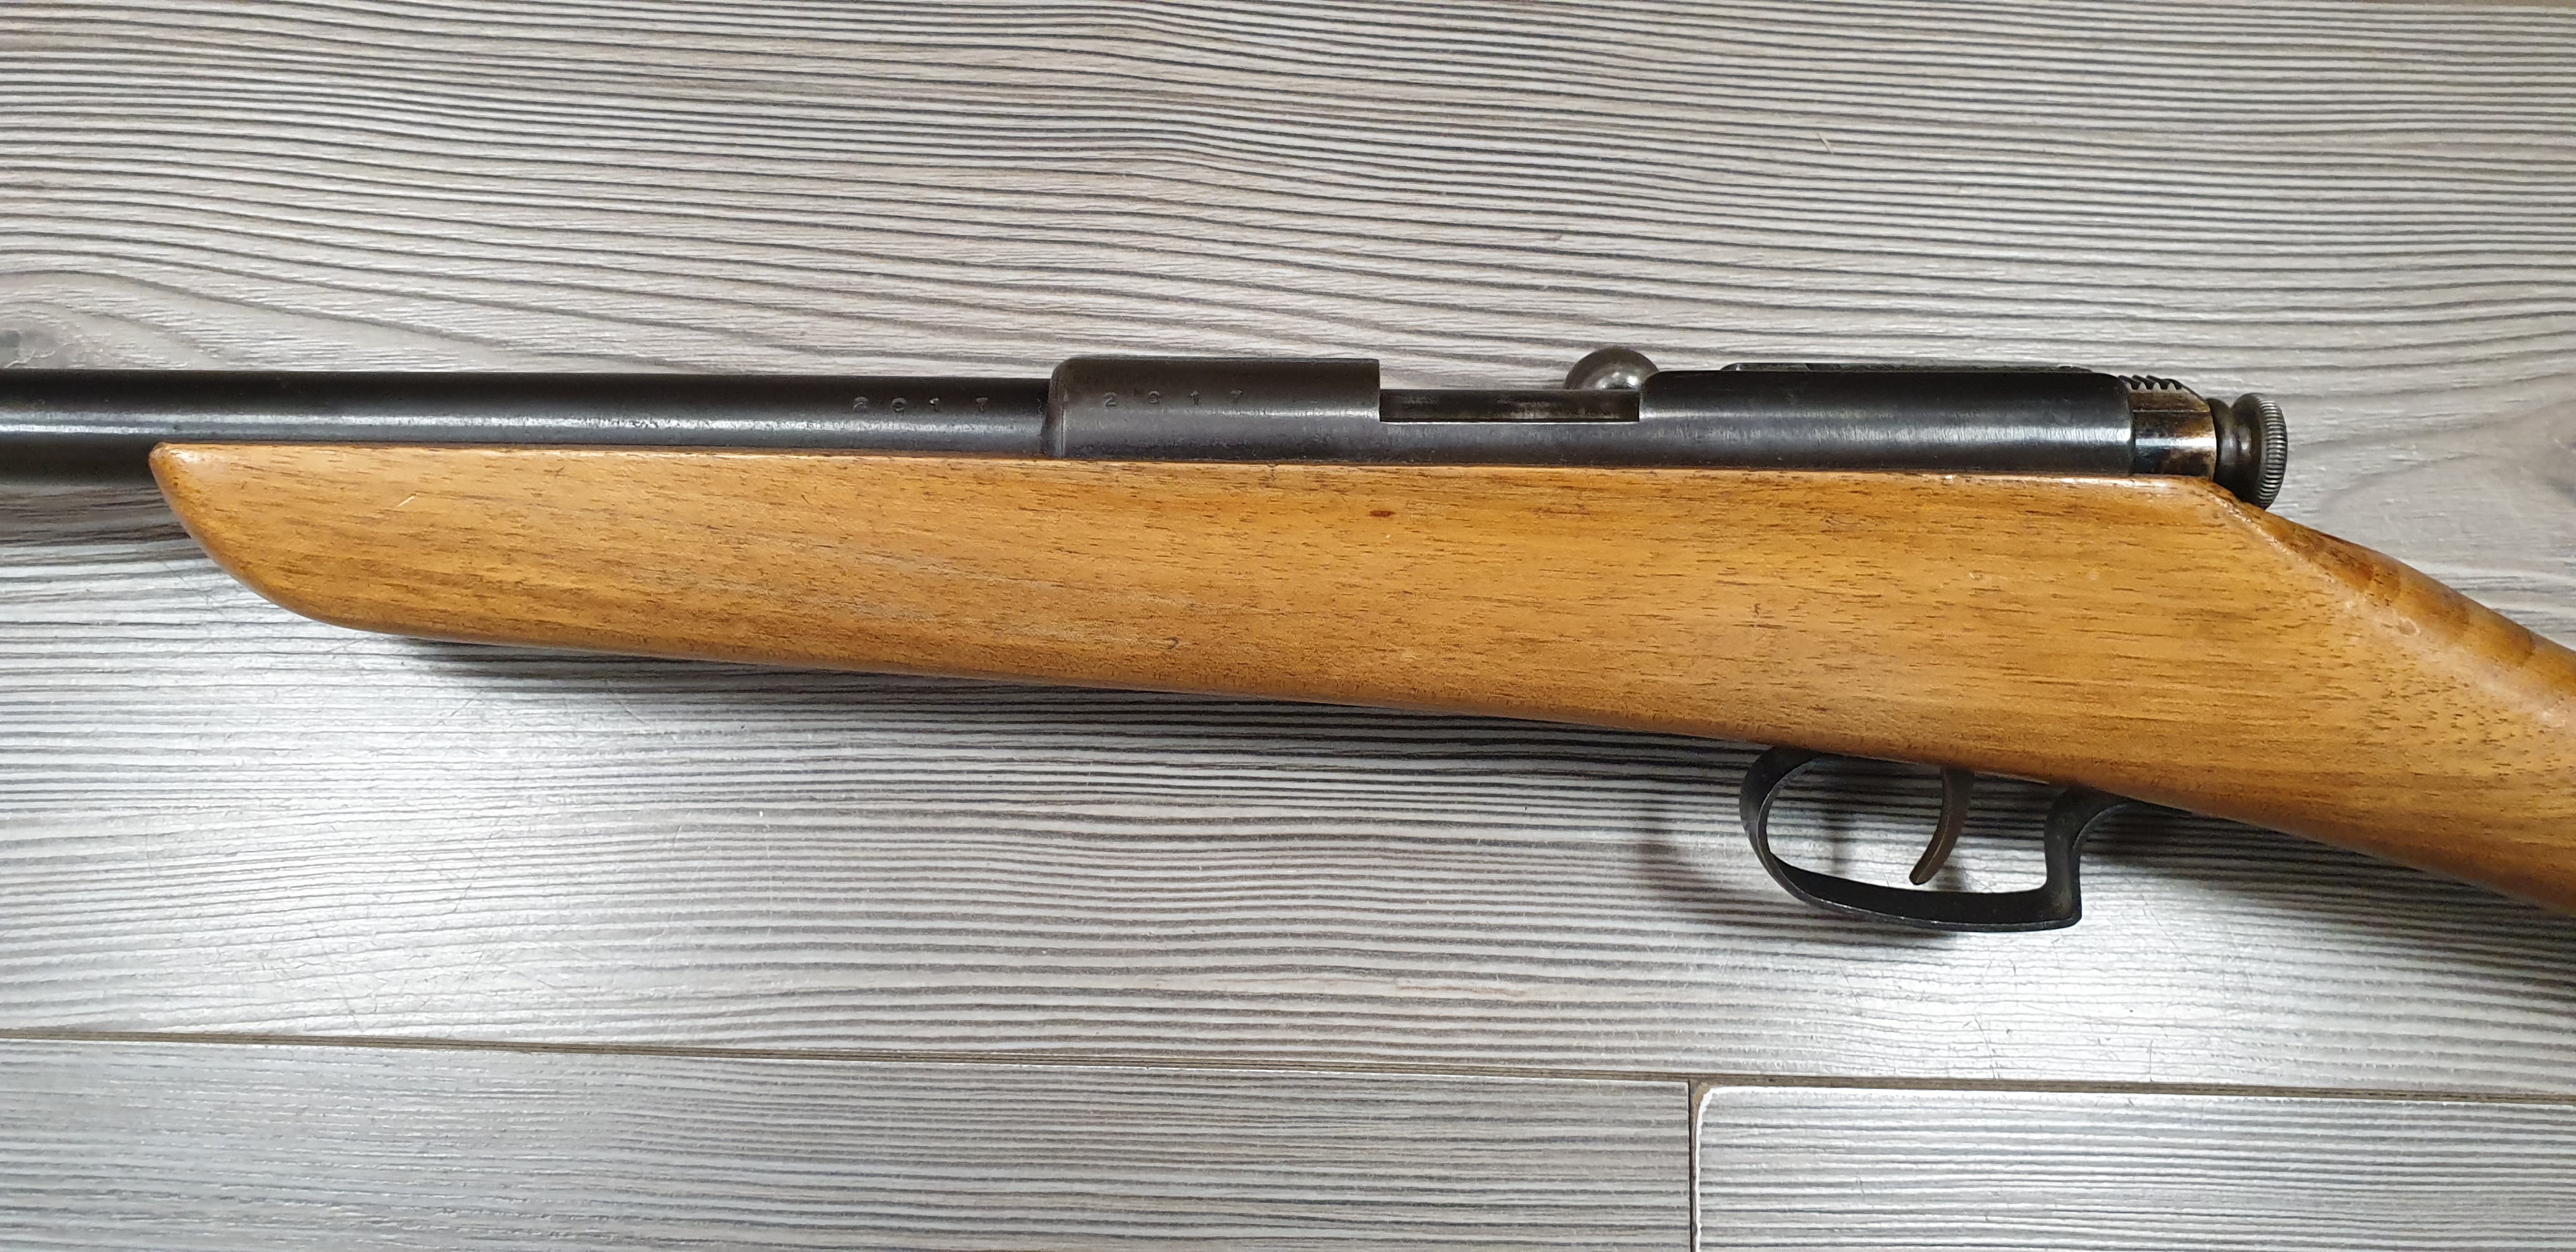 carabine 22LR - L'armurerie française